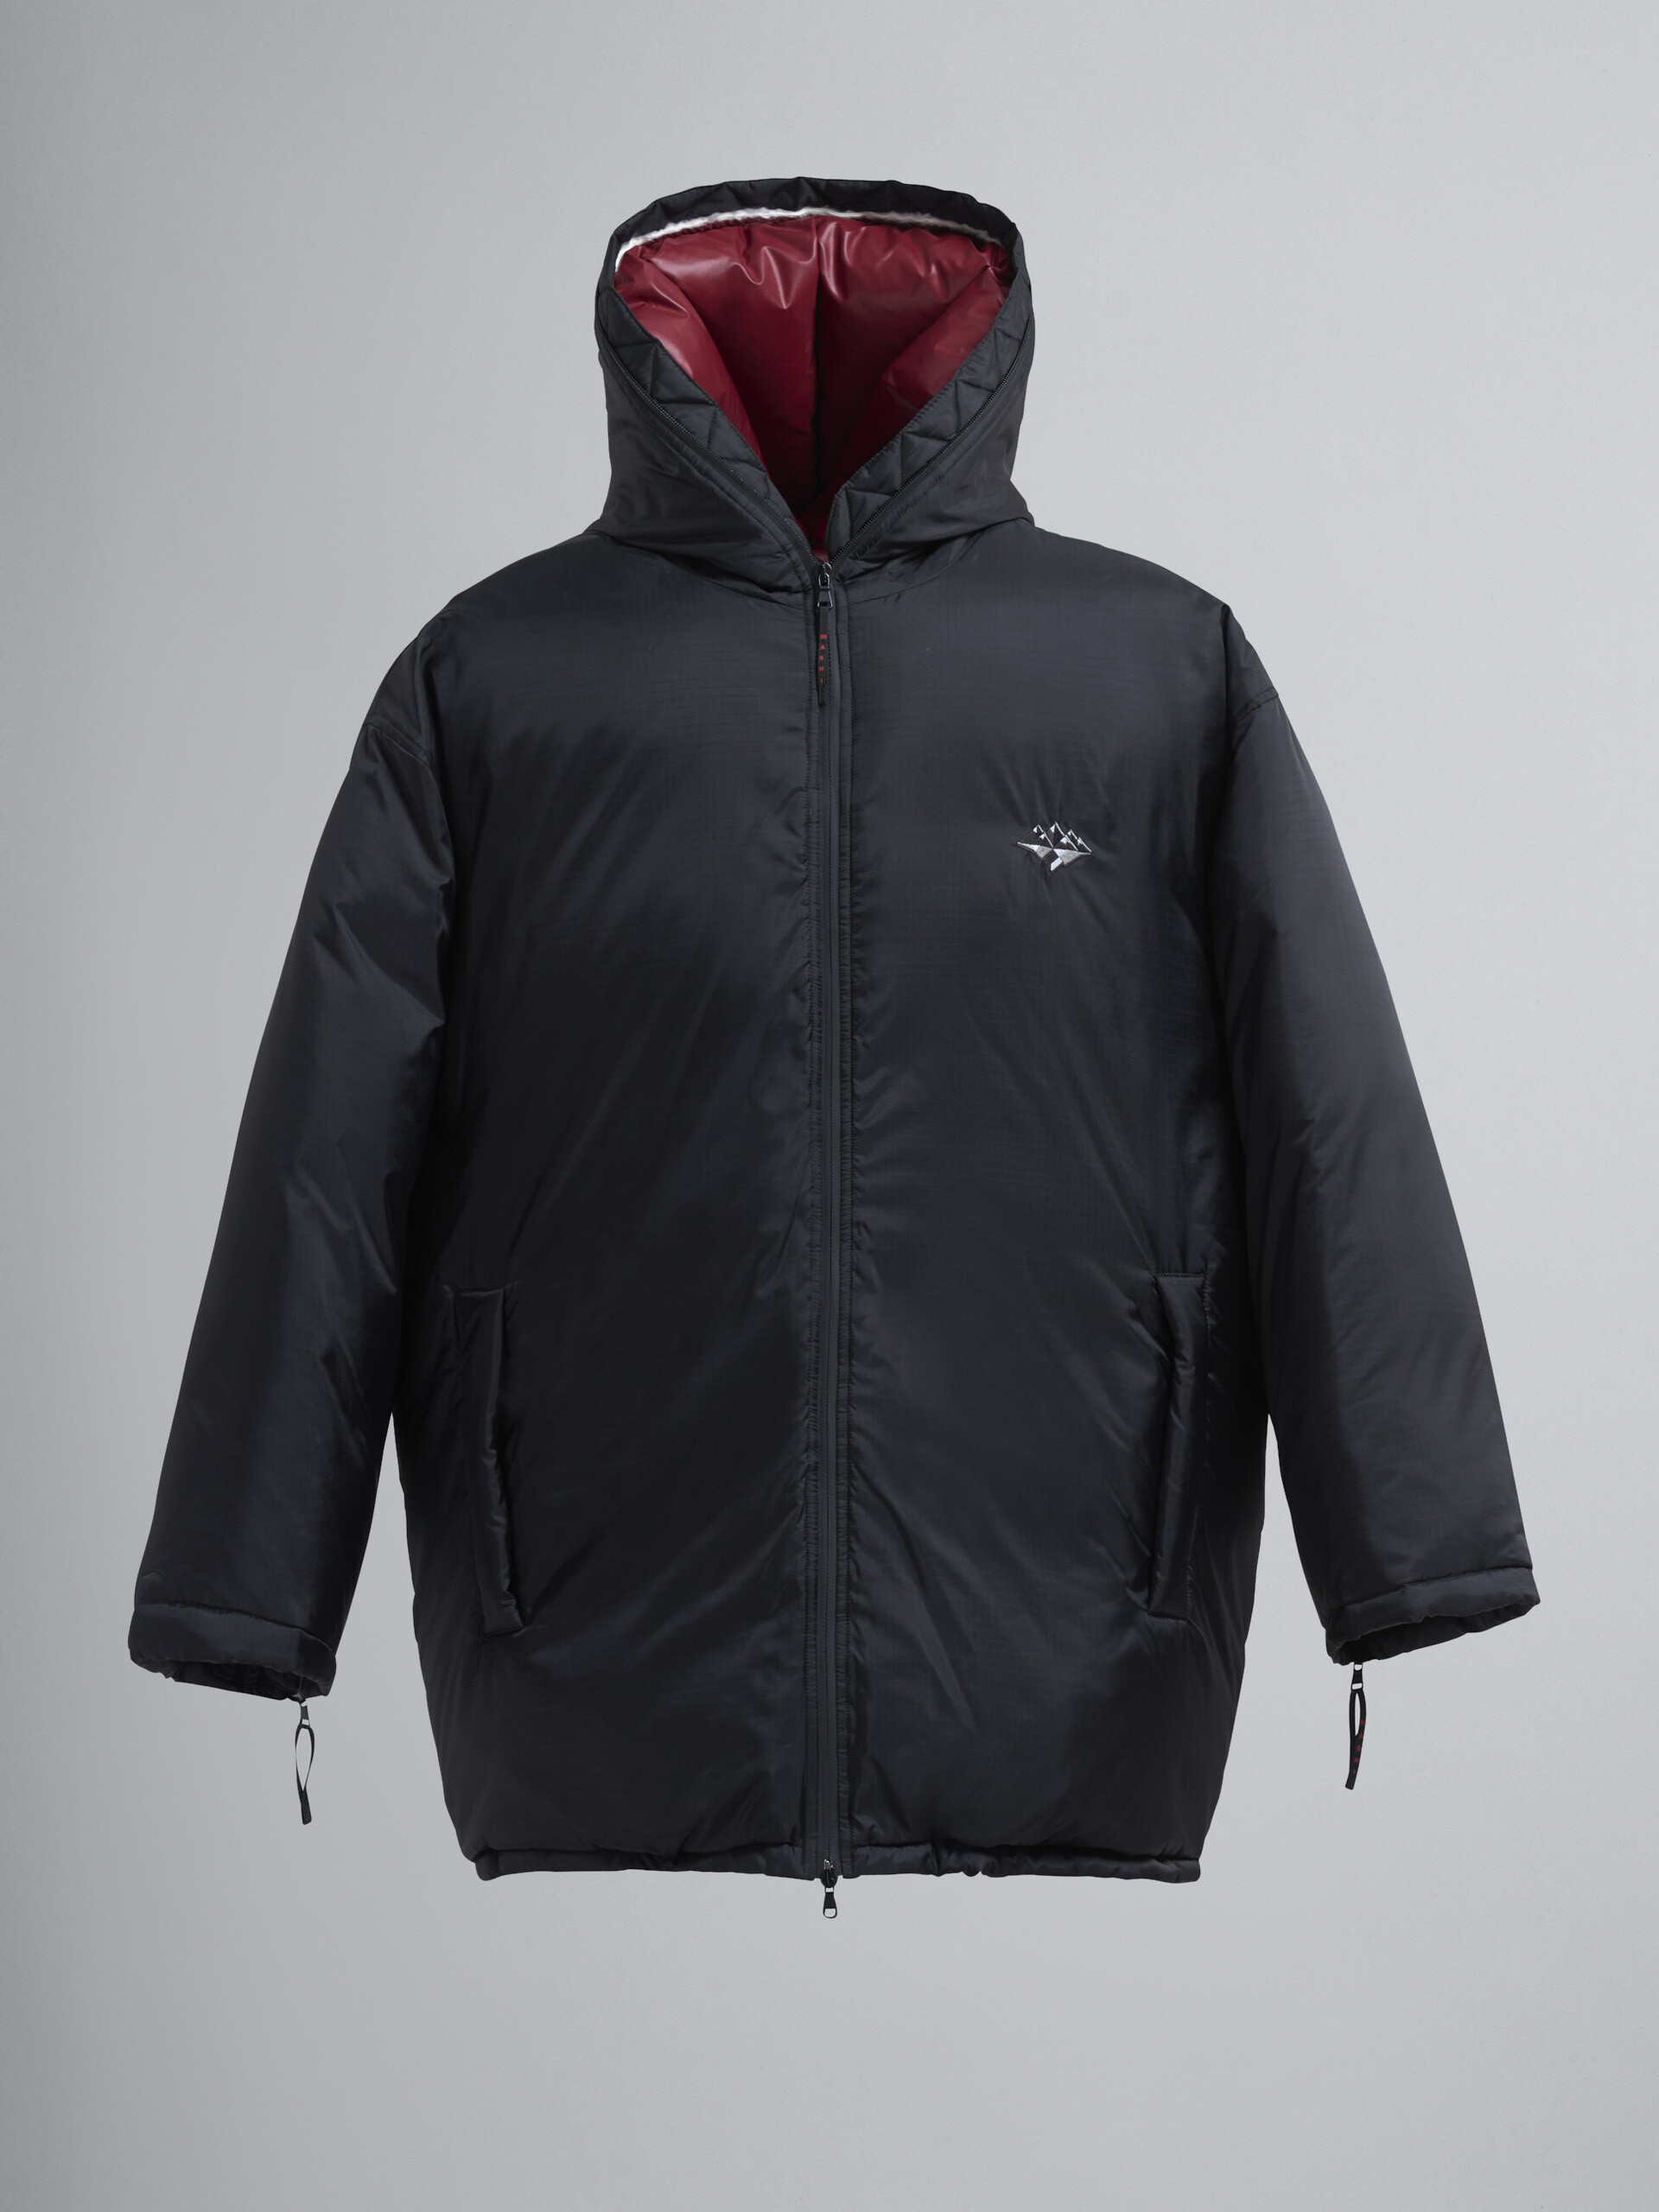 Ripstop nylon down jacket - Winter jackets - Image 1